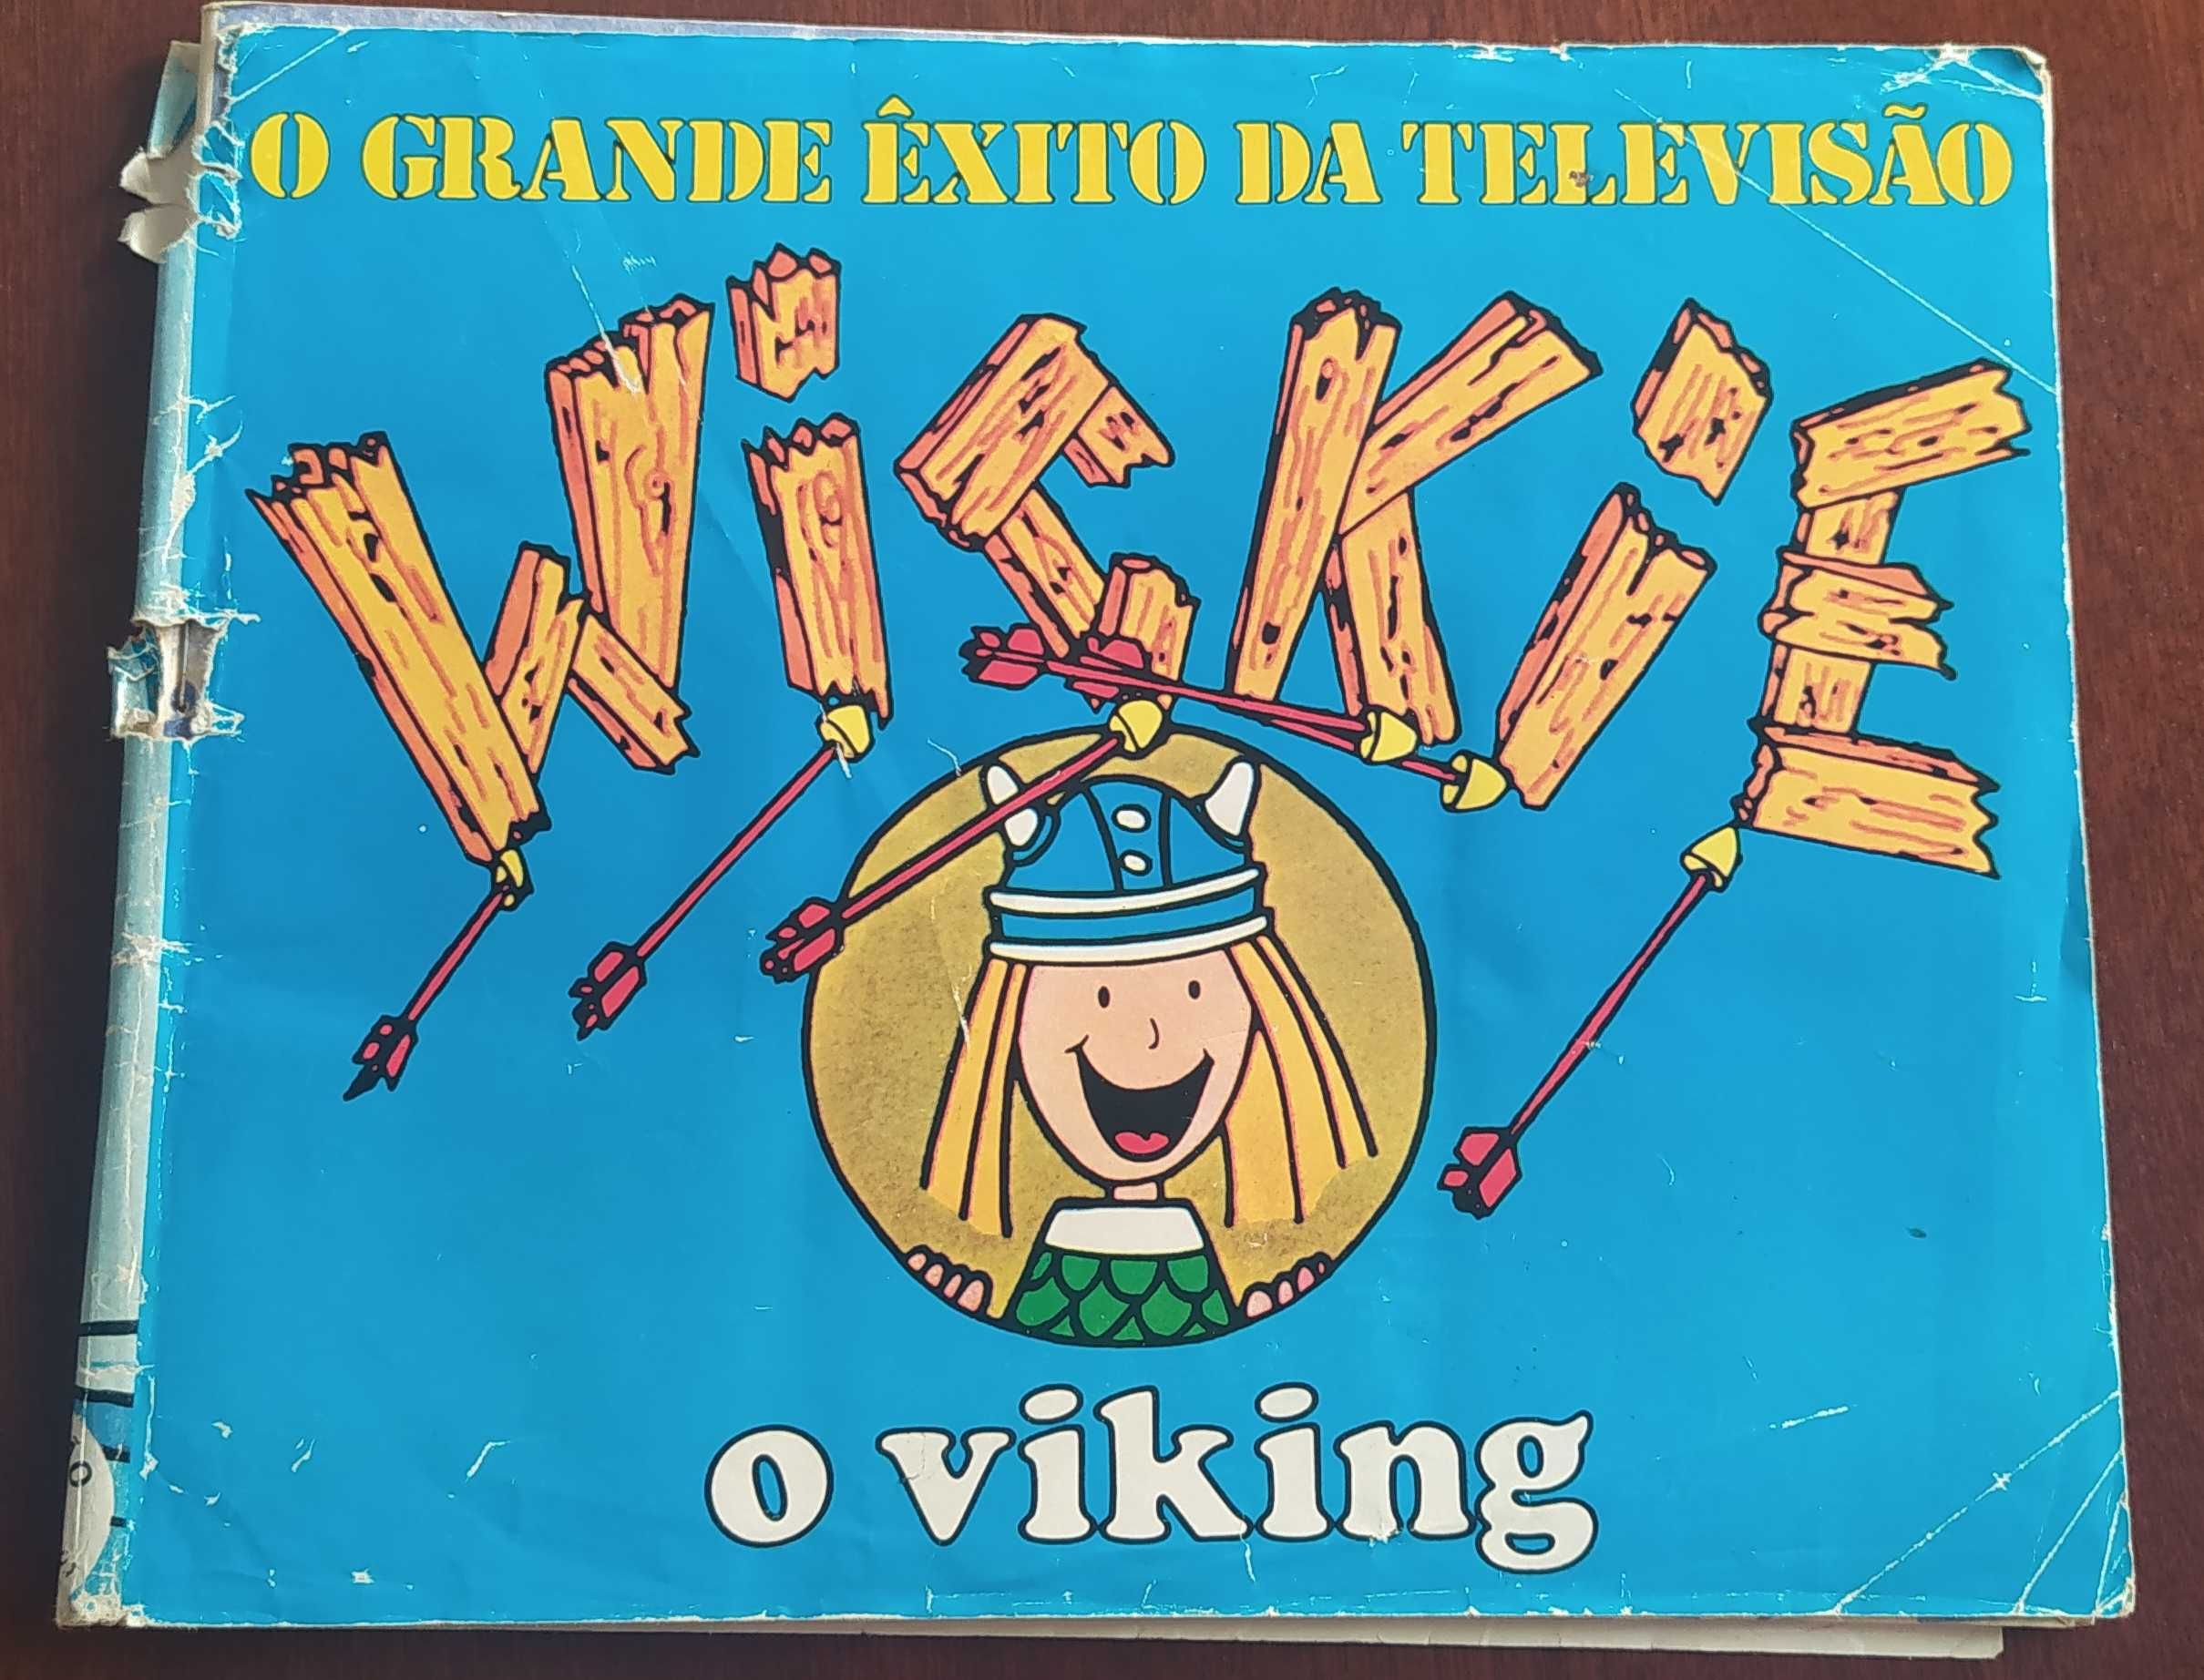 Caderneta Disvenda "Wickie o Viking"